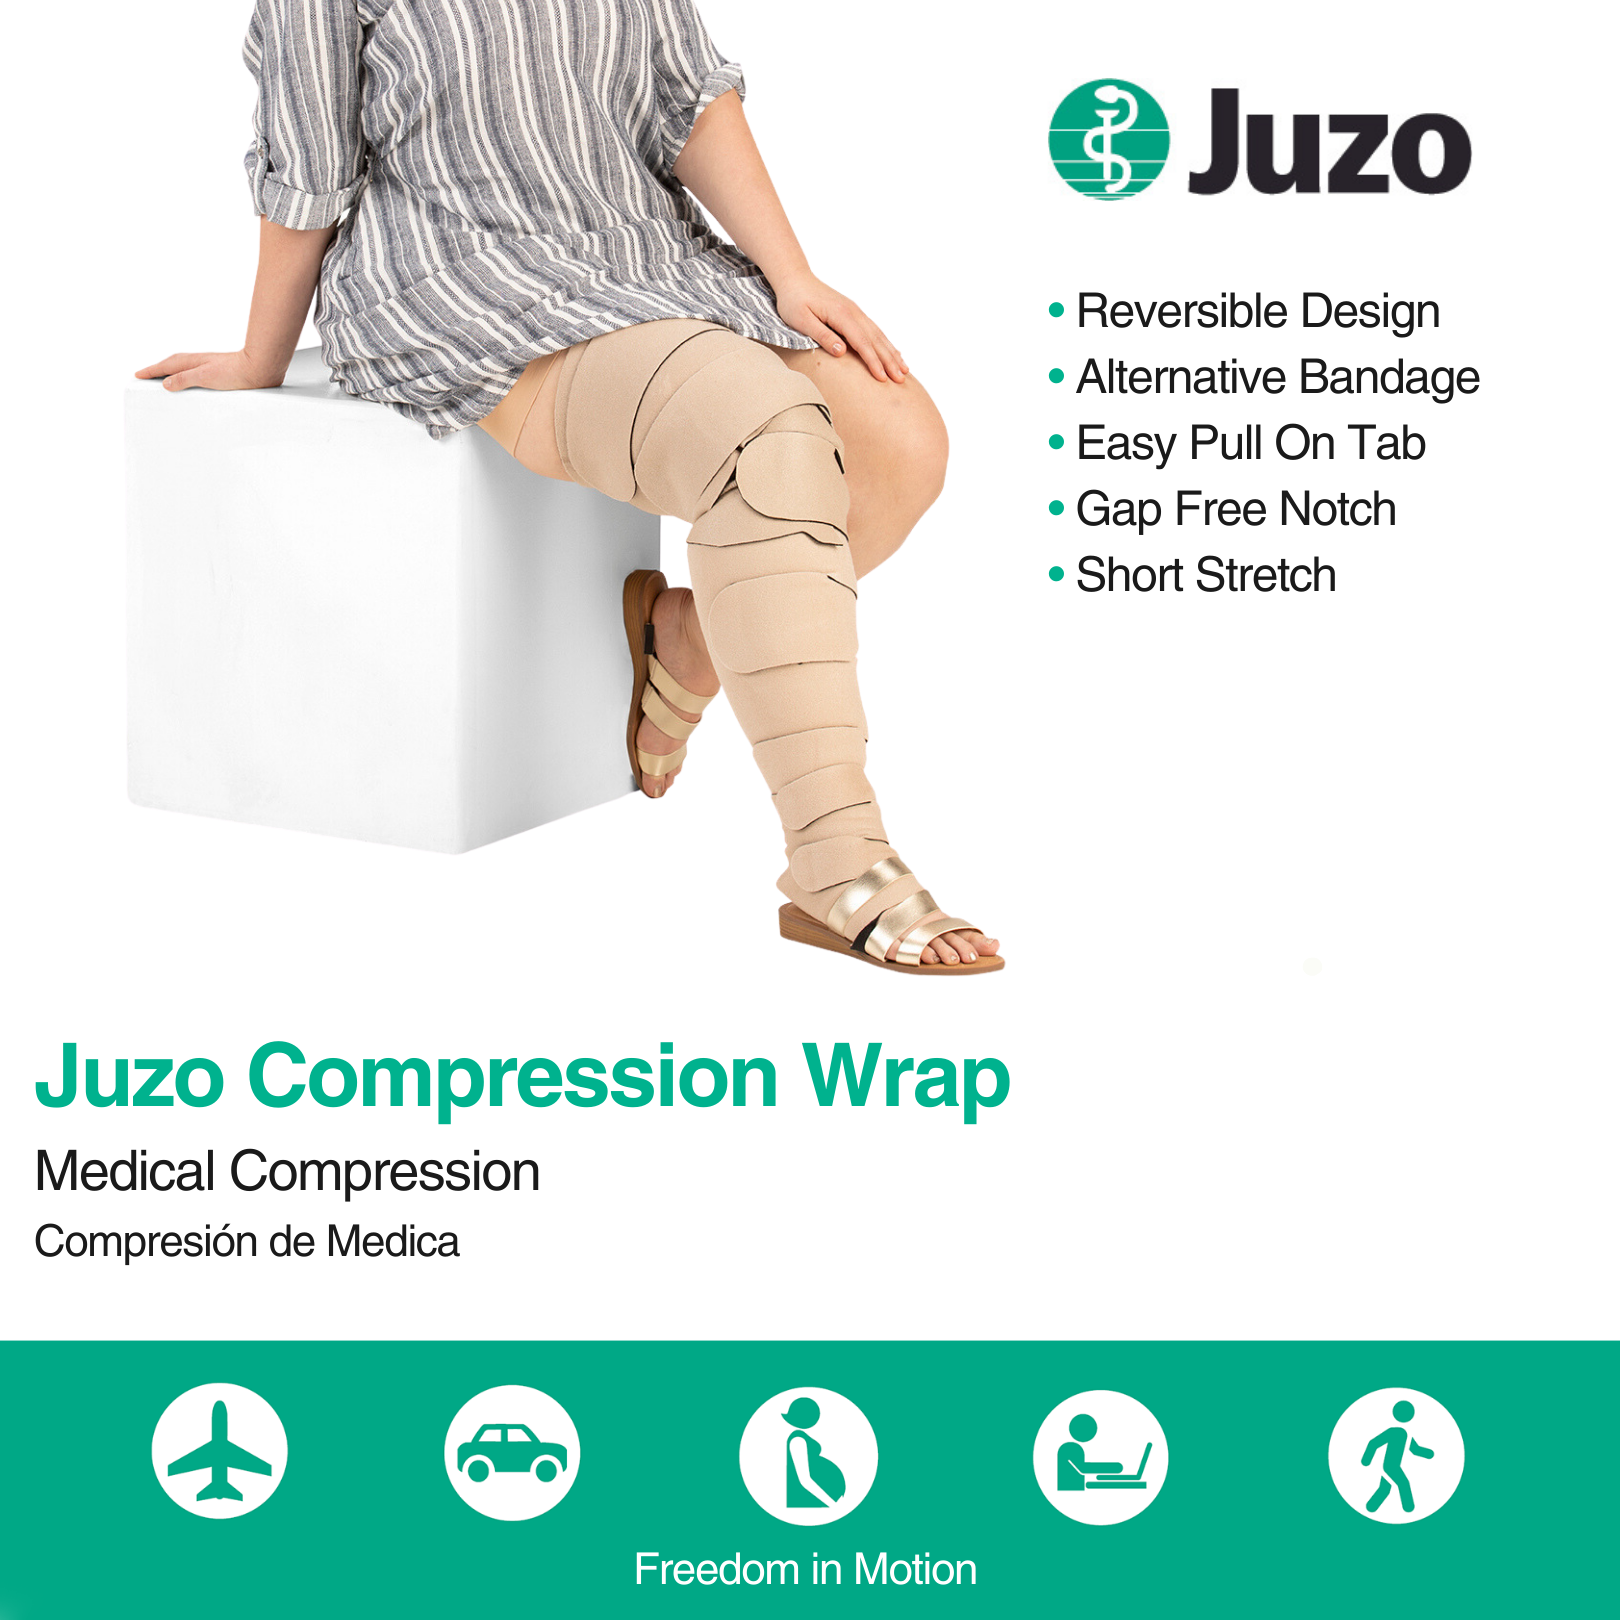 Juzo Short Stretch Compression Wrap Accessories, Wrap Extenders